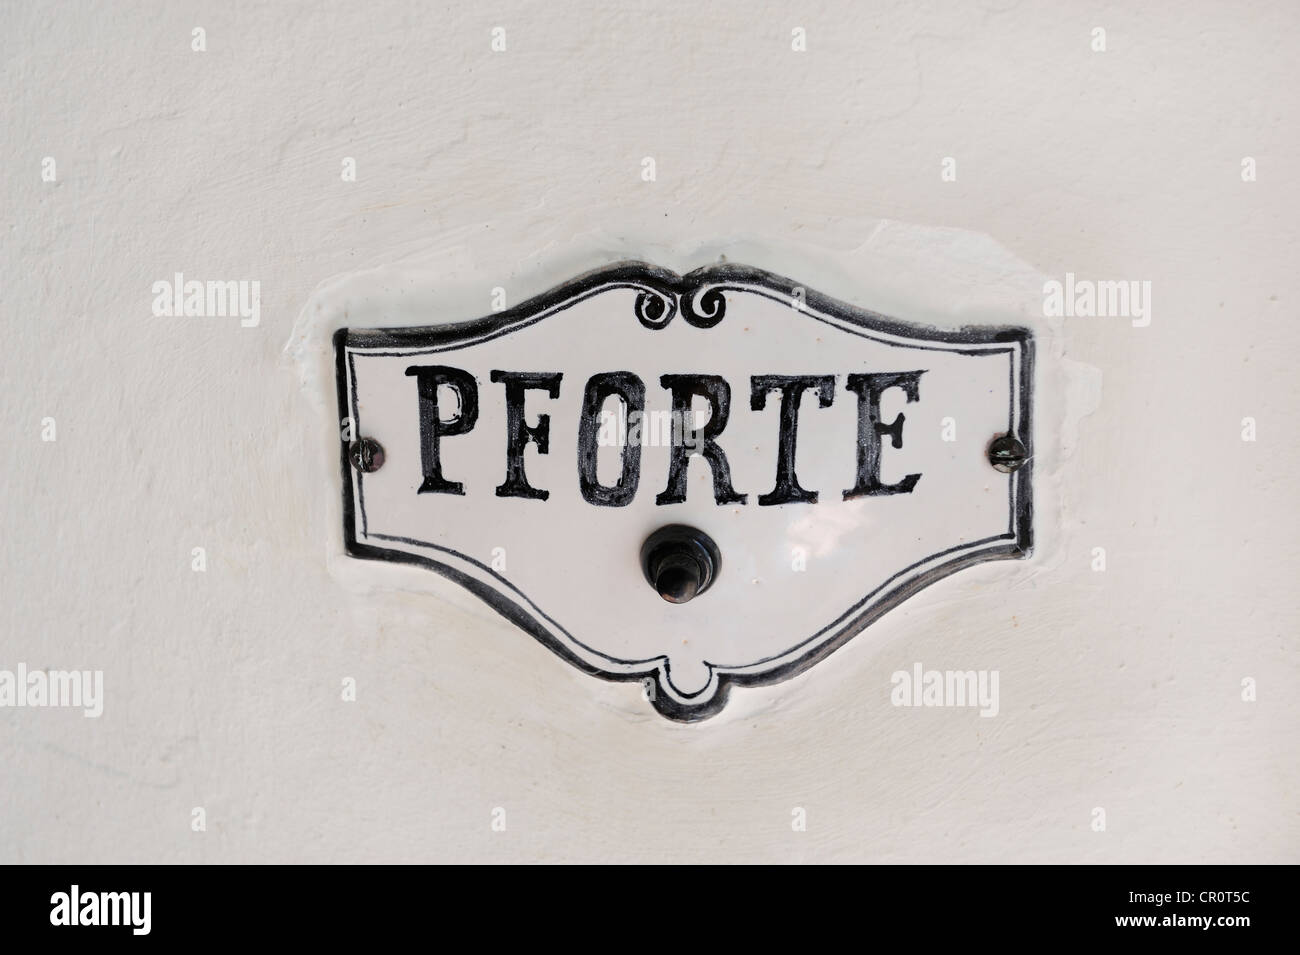 Doorbell, labelled Pforte, German for gateway Stock Photo